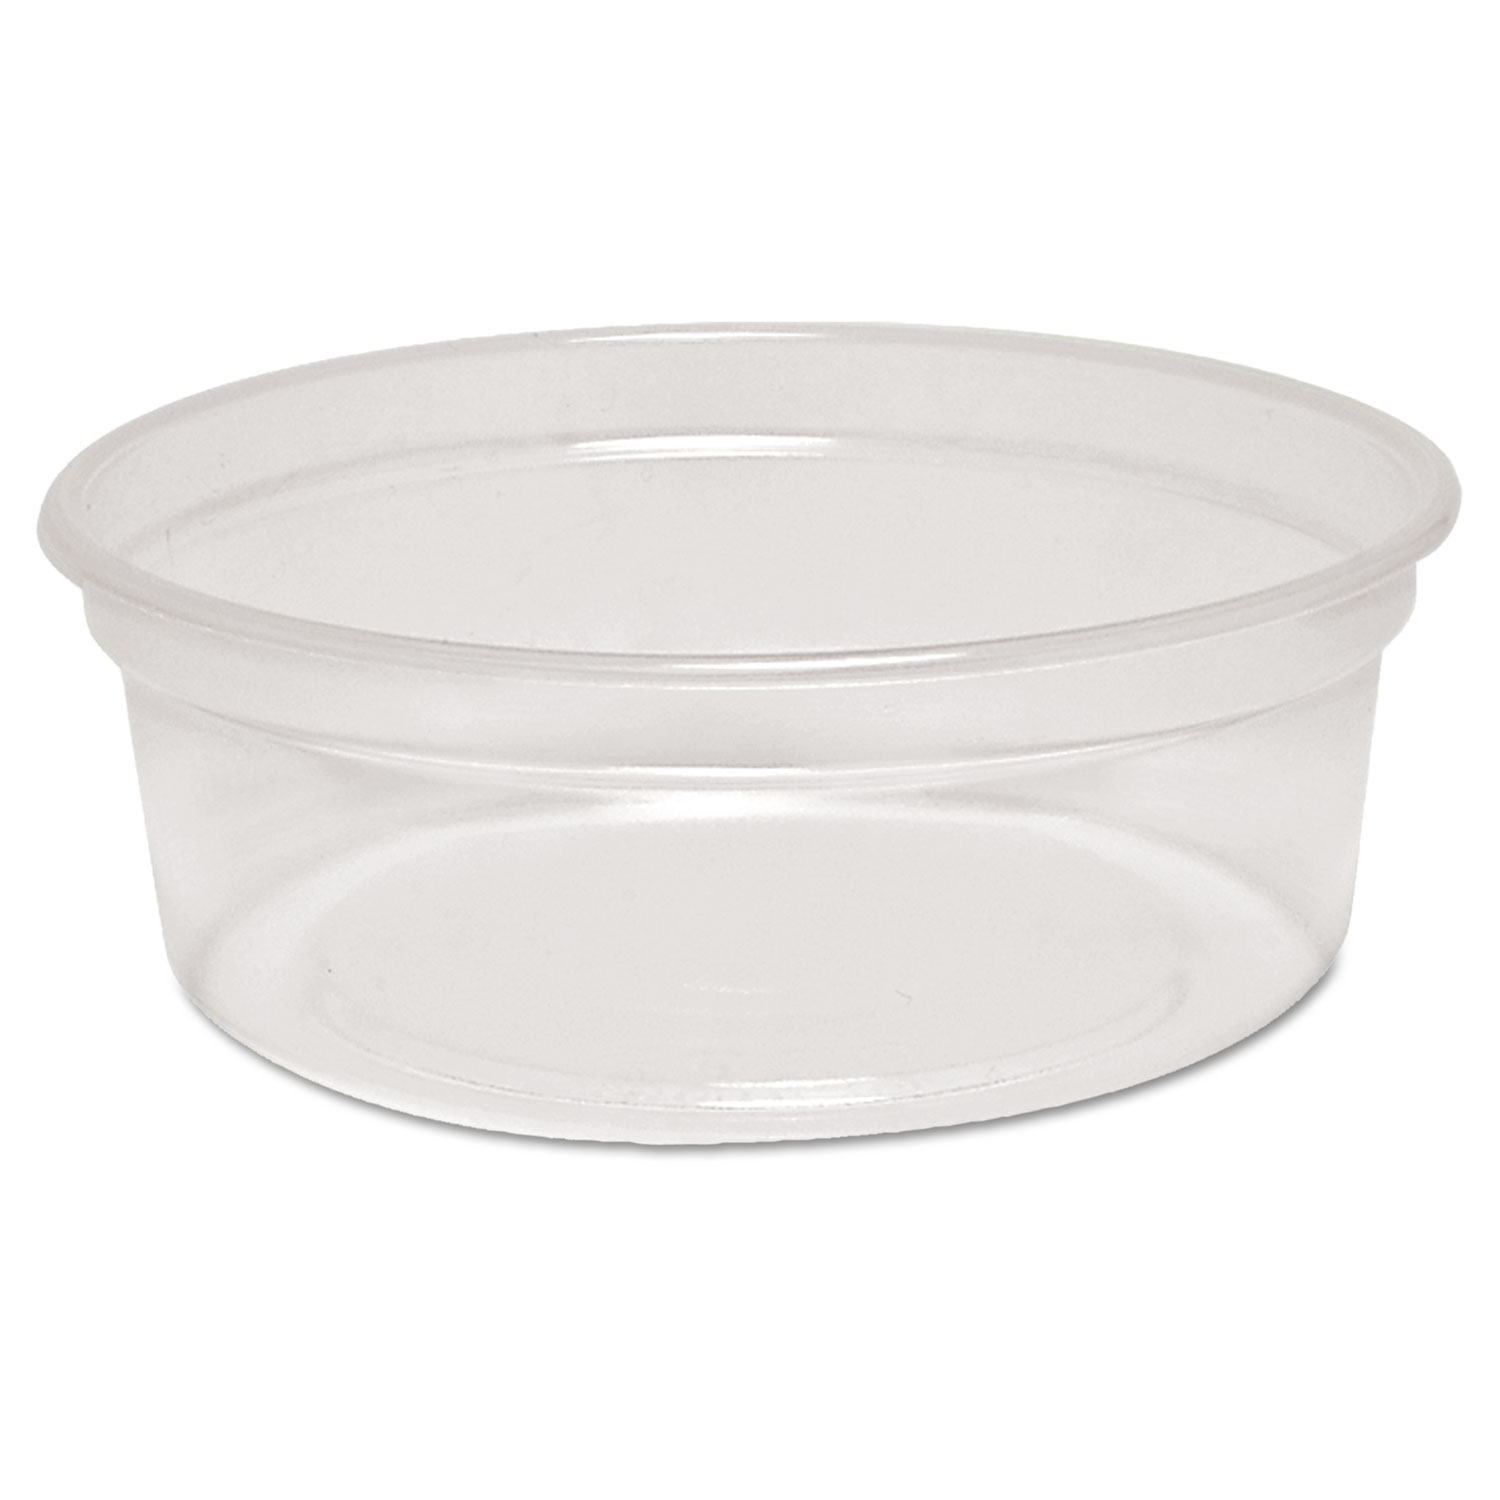  Dart MN8-0100 MicroGourmet Food Container, 8 oz, Plastic, Clear, 500/Carton (DCCMN80100) 